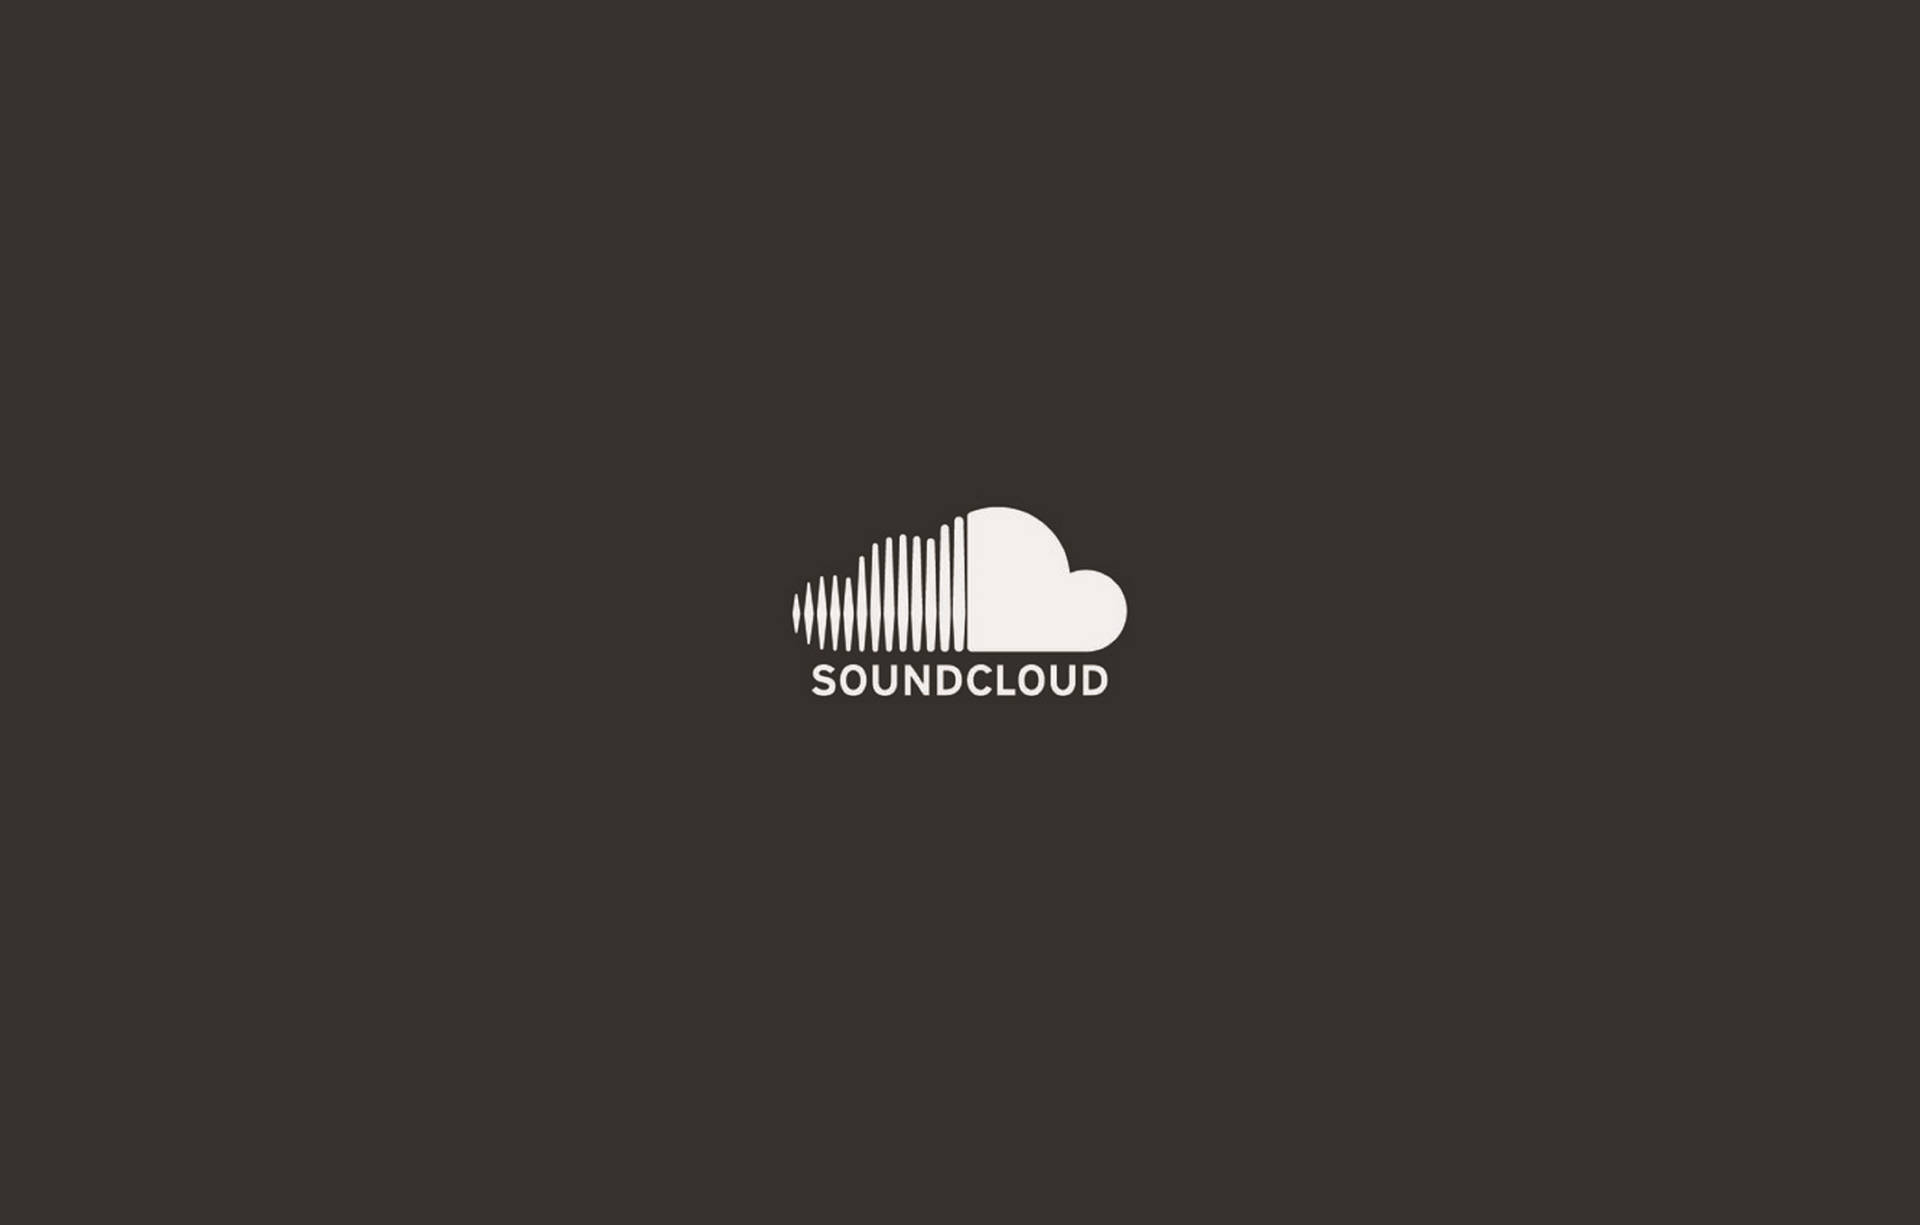 Soundcloud Audio Grayscale Background